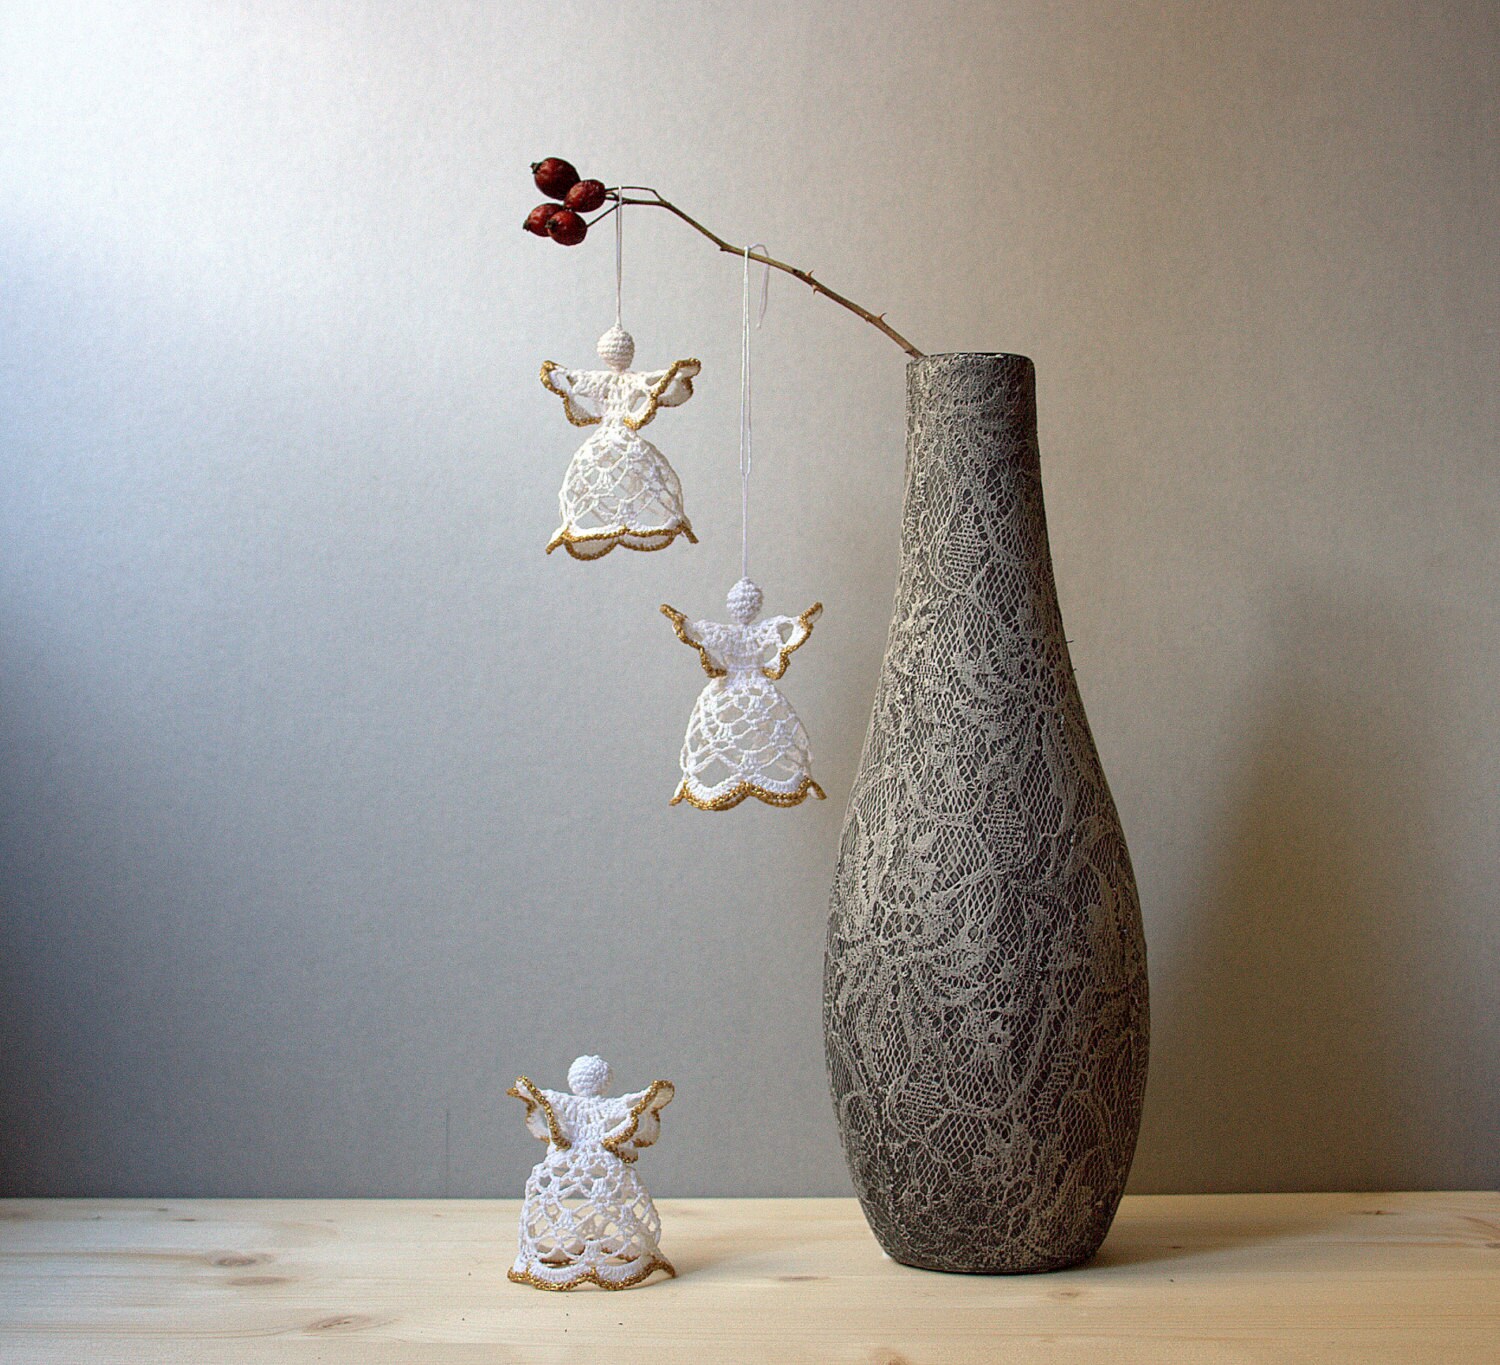 Crochet angel for livingroom decor romantic and retro italian | Etsy